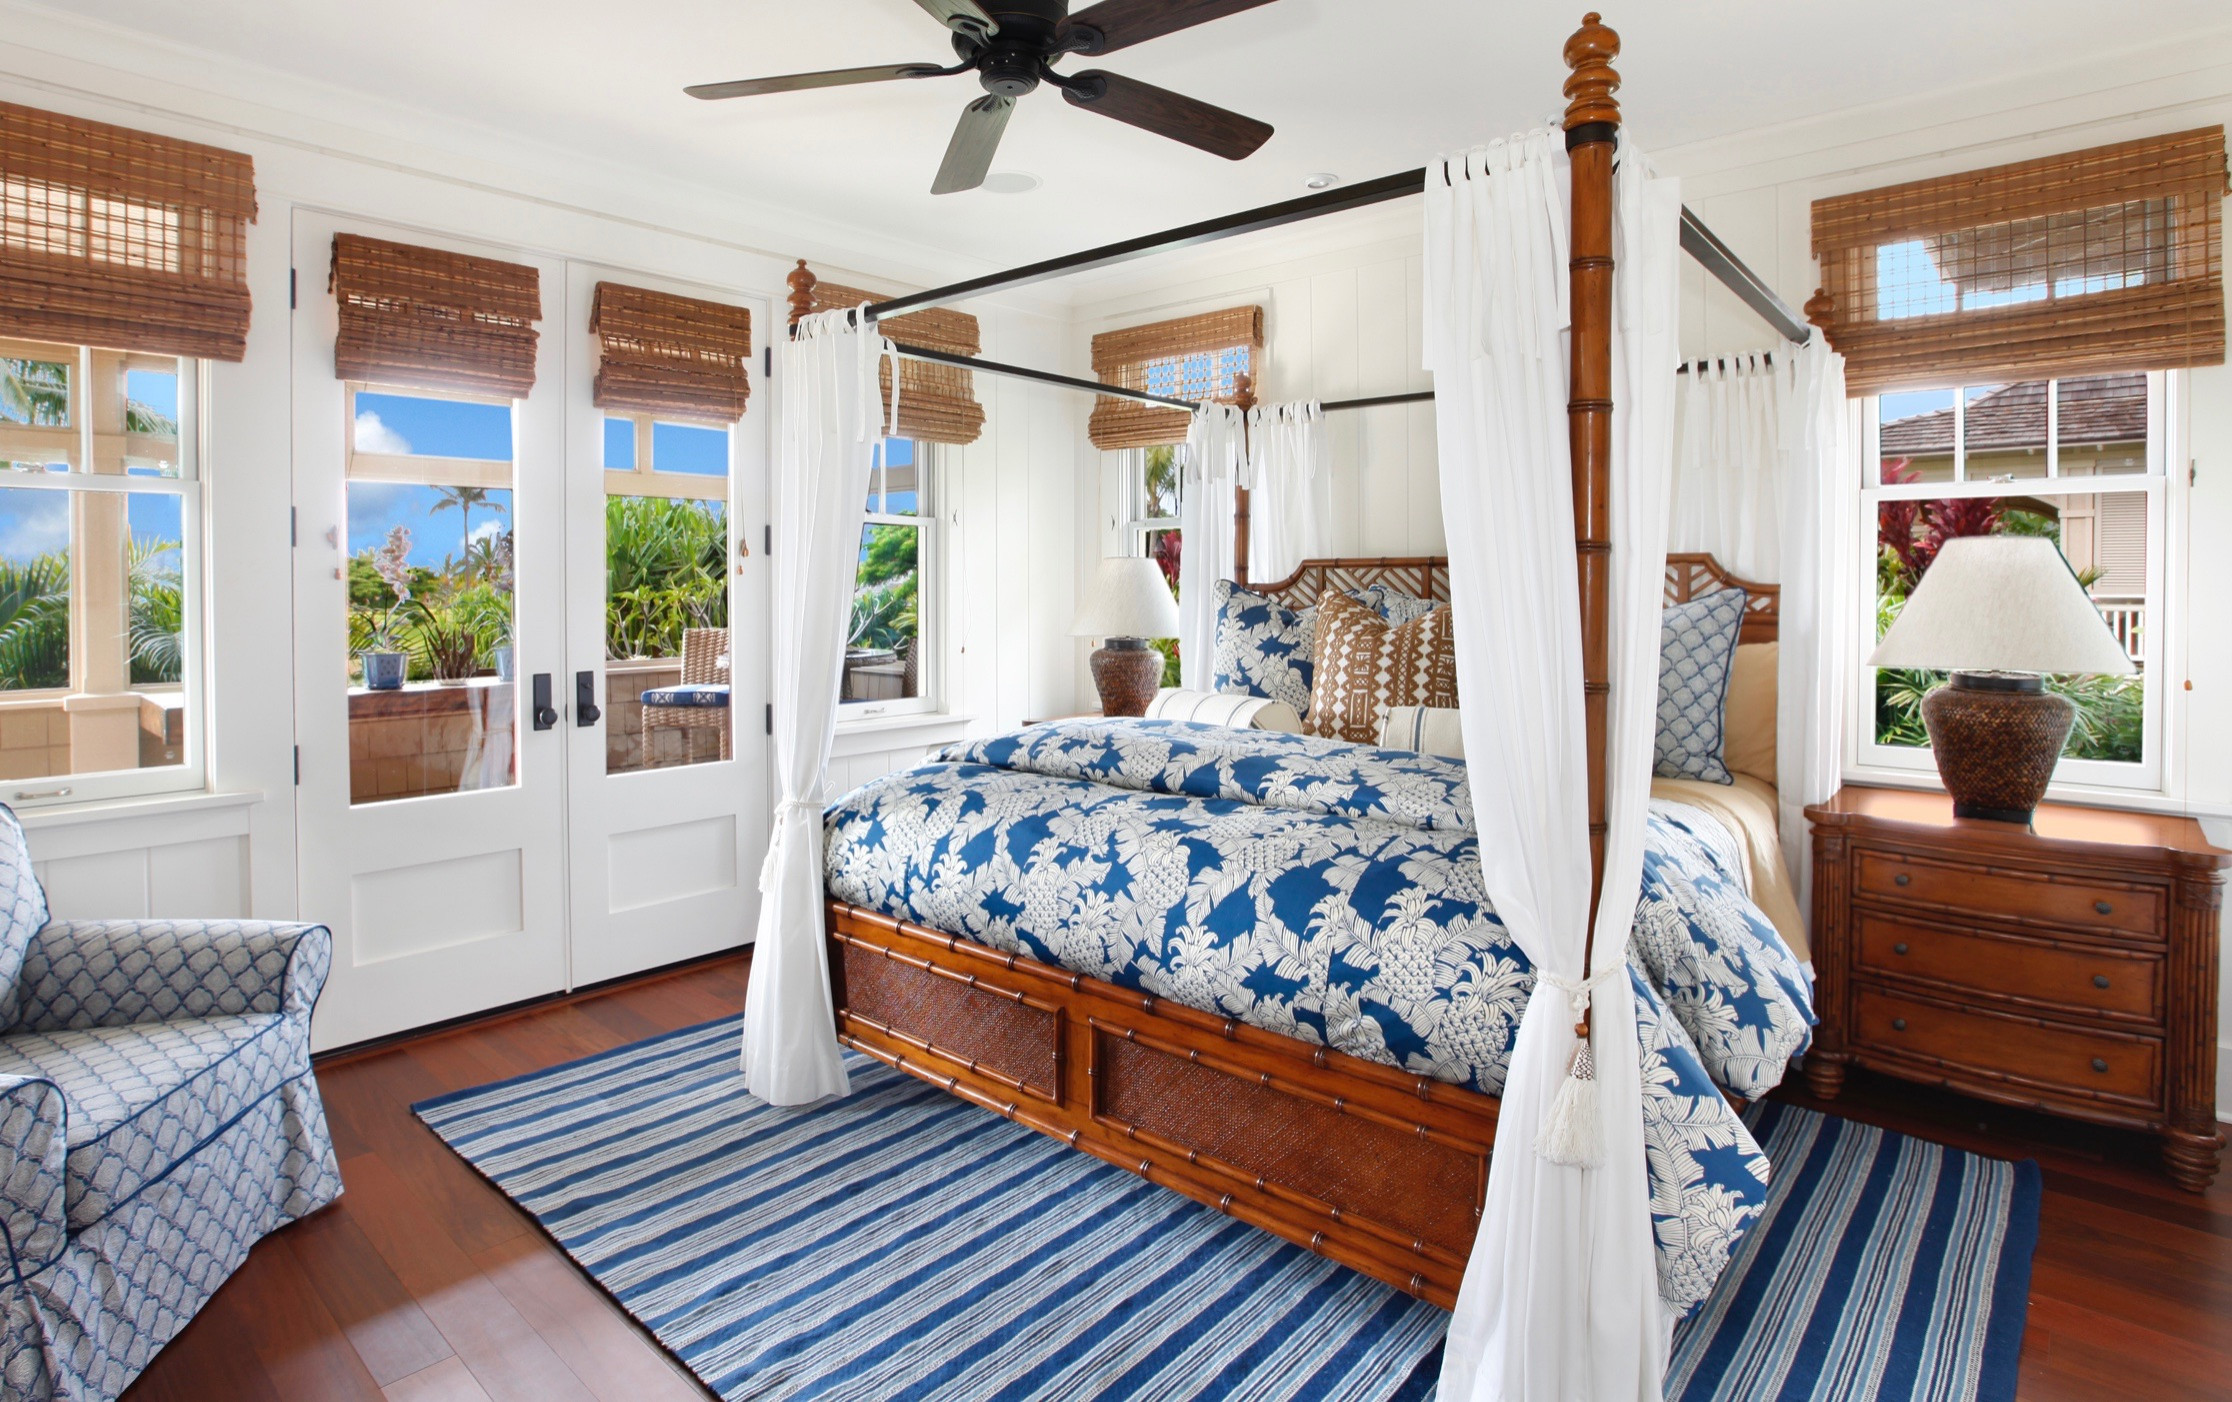 75 Tropical Bedroom Ideas You Ll Love